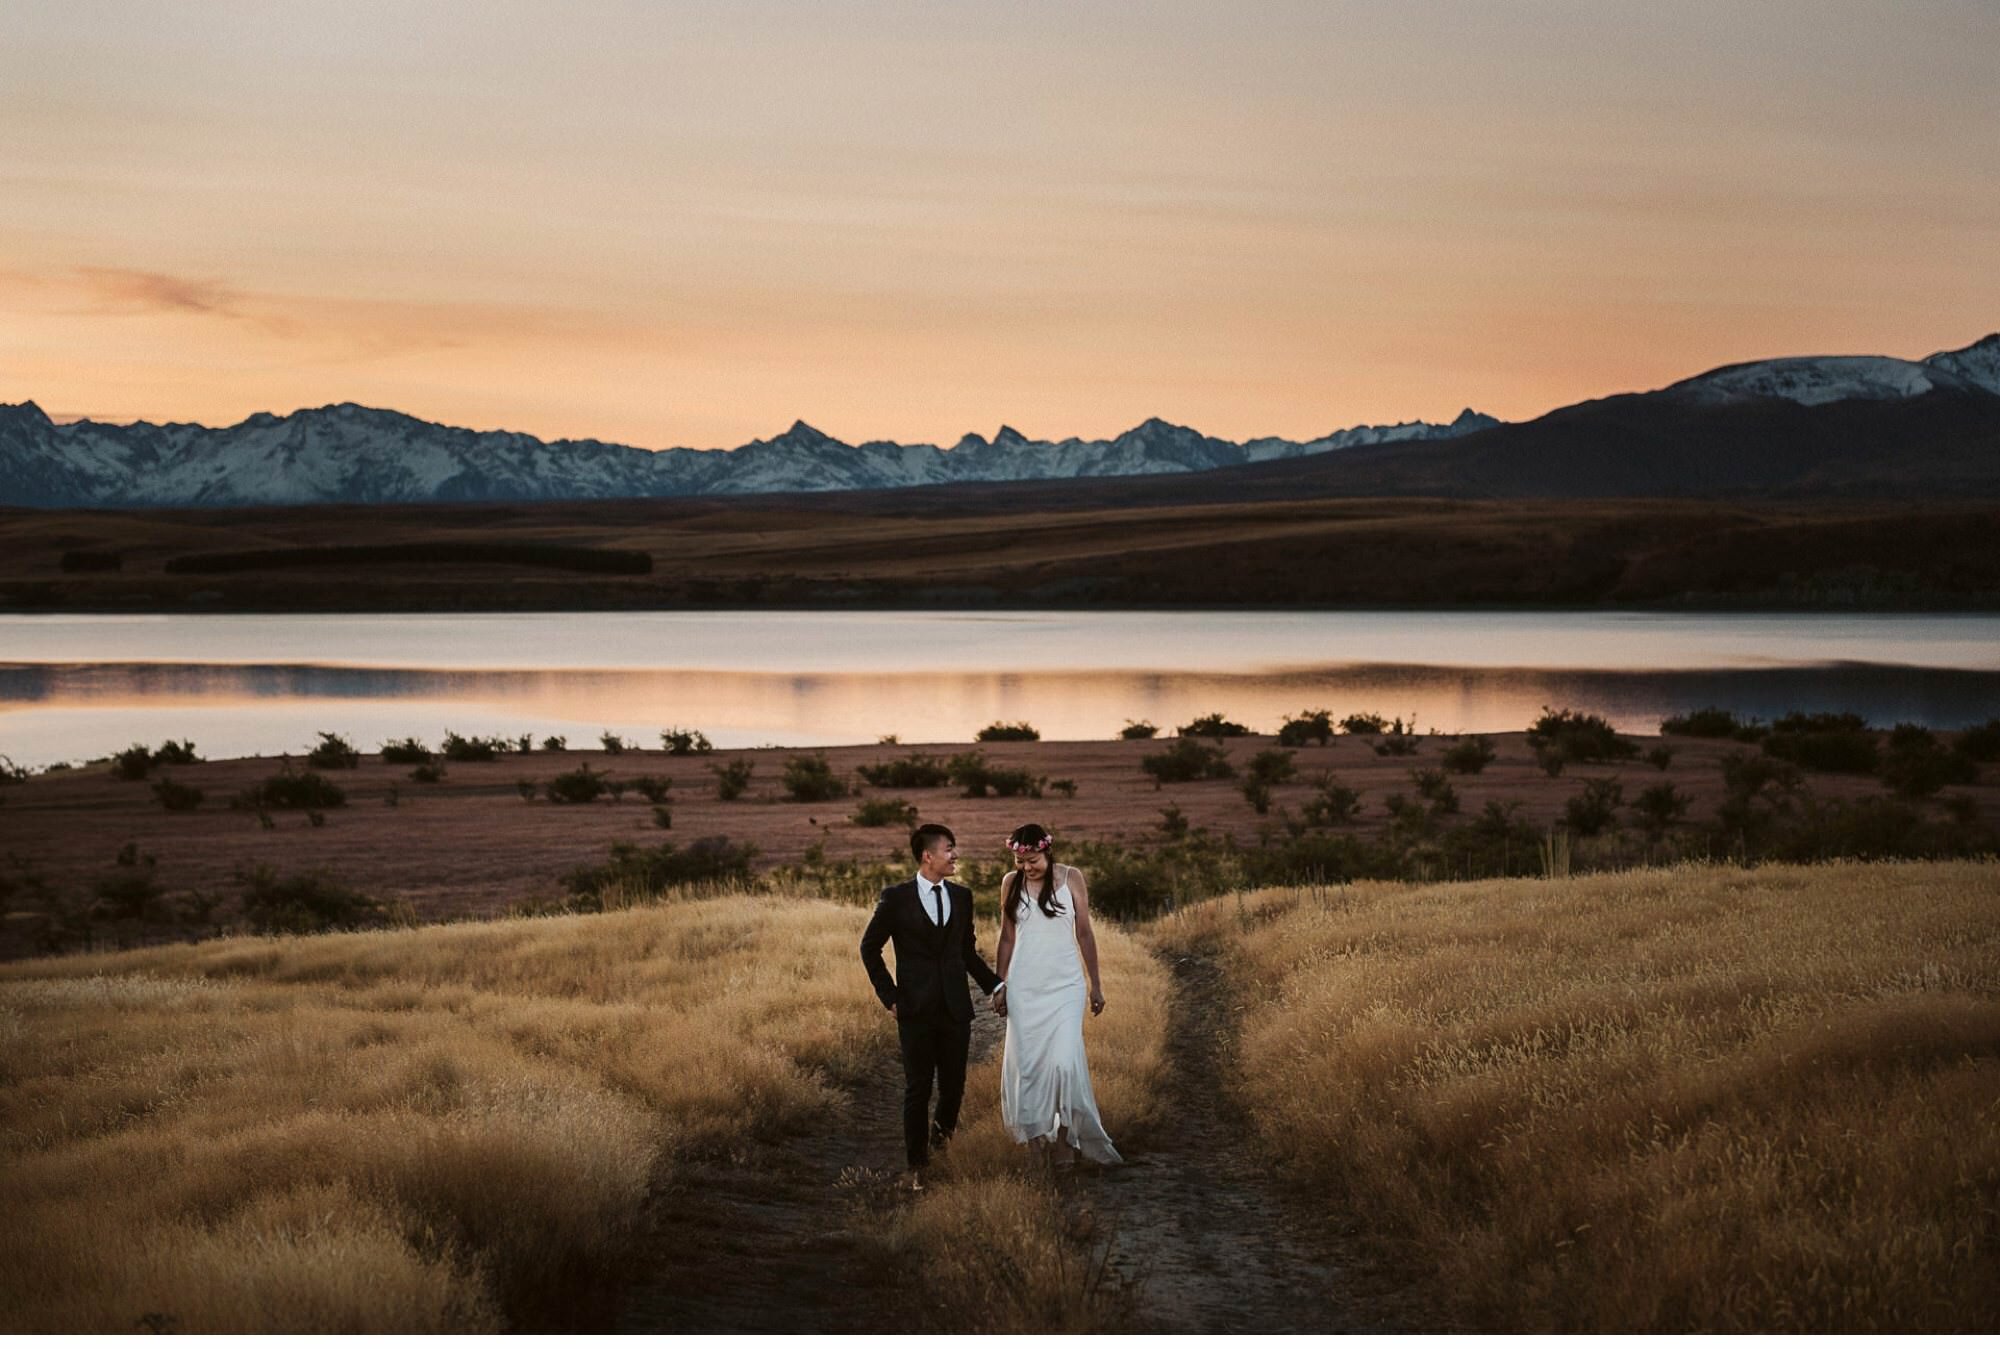 017 - New Zealand Wedding Photography Highlights.jpg